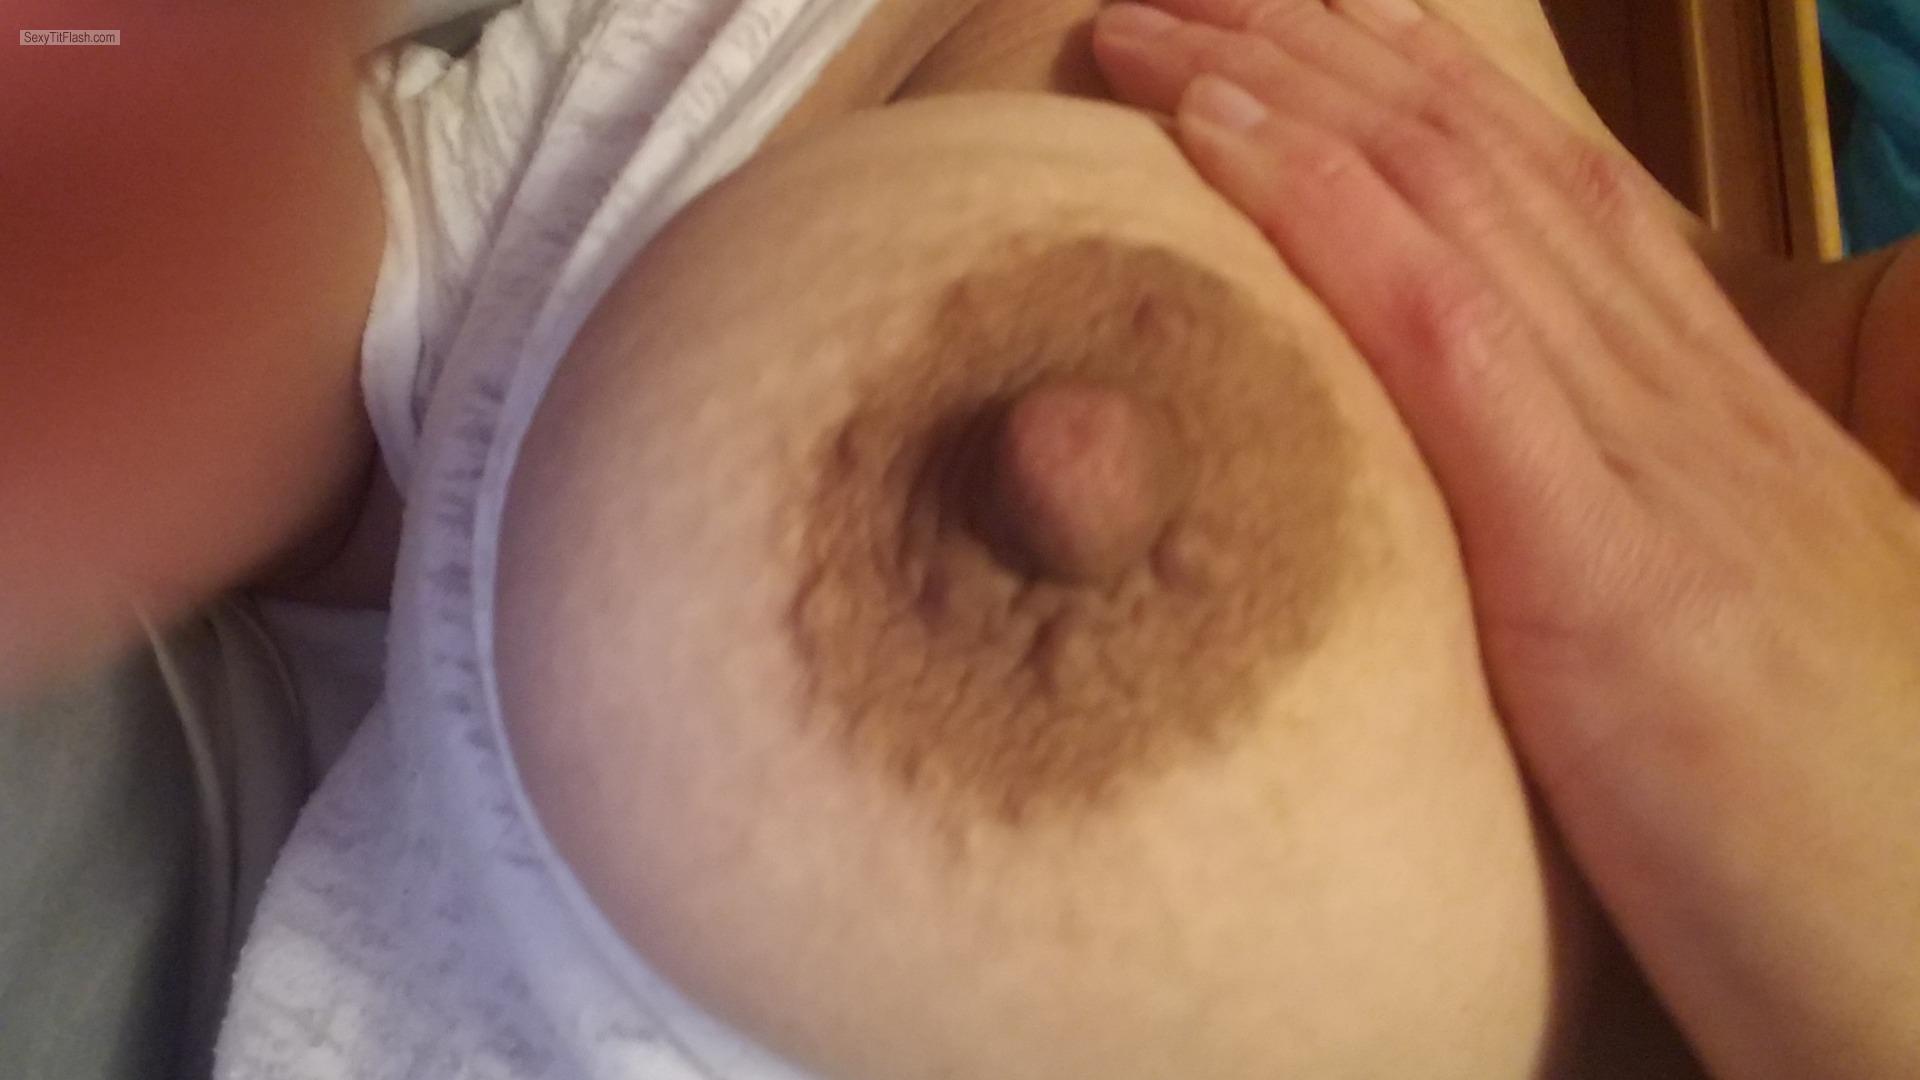 Tit Flash: My Big Tits (Selfie) - Roxy1976 from United States